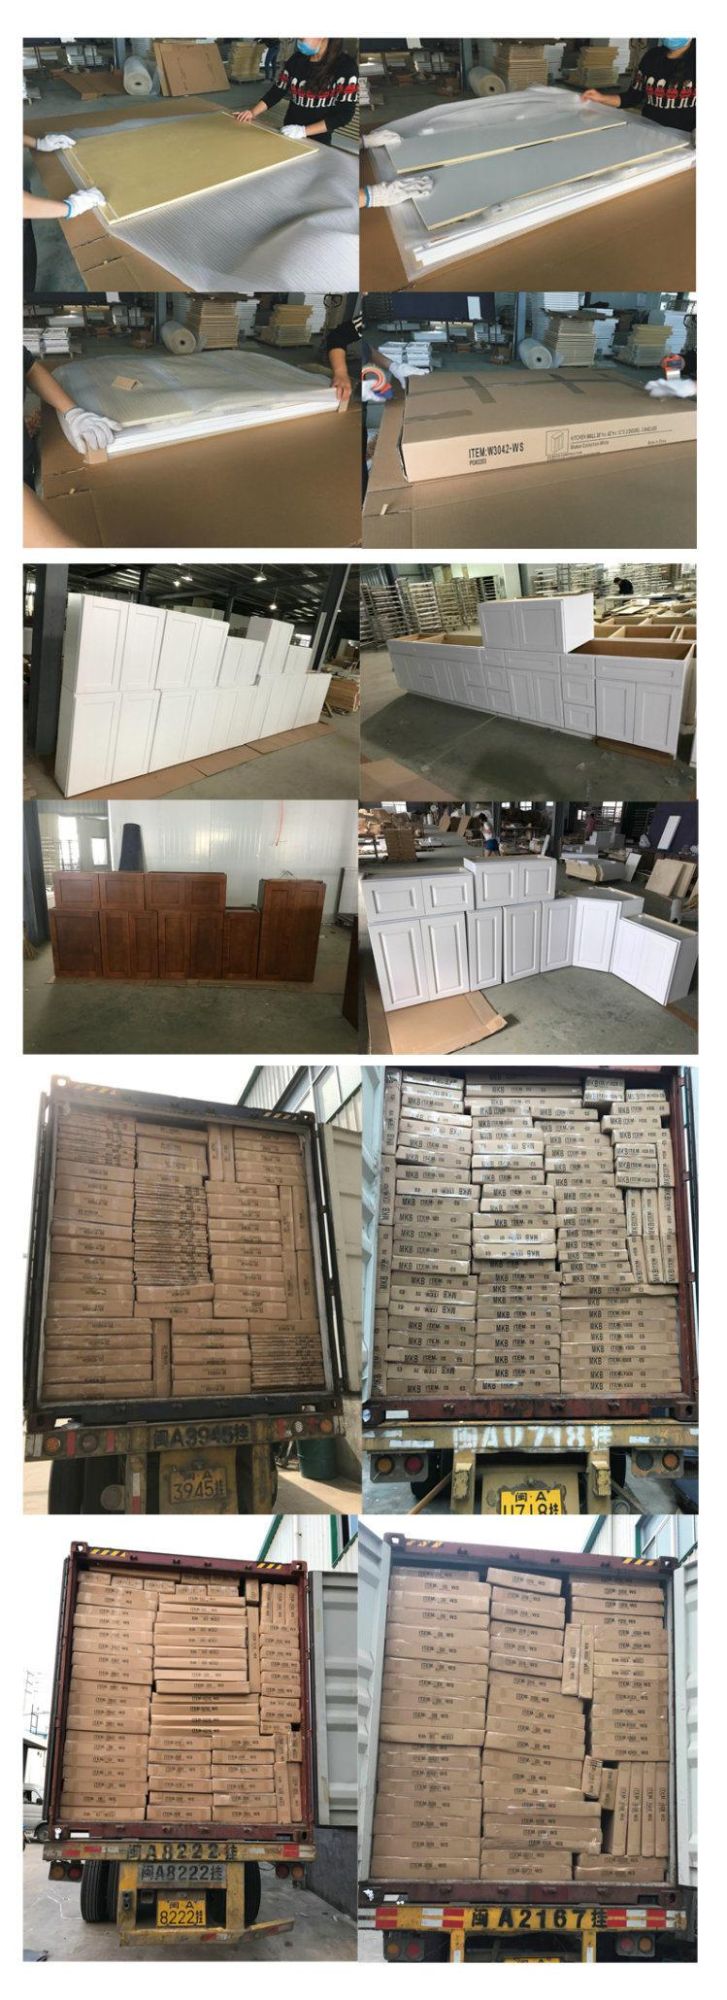 MDF PVC Solid Wood Bathroom Vanity Cabinet Factory Directly